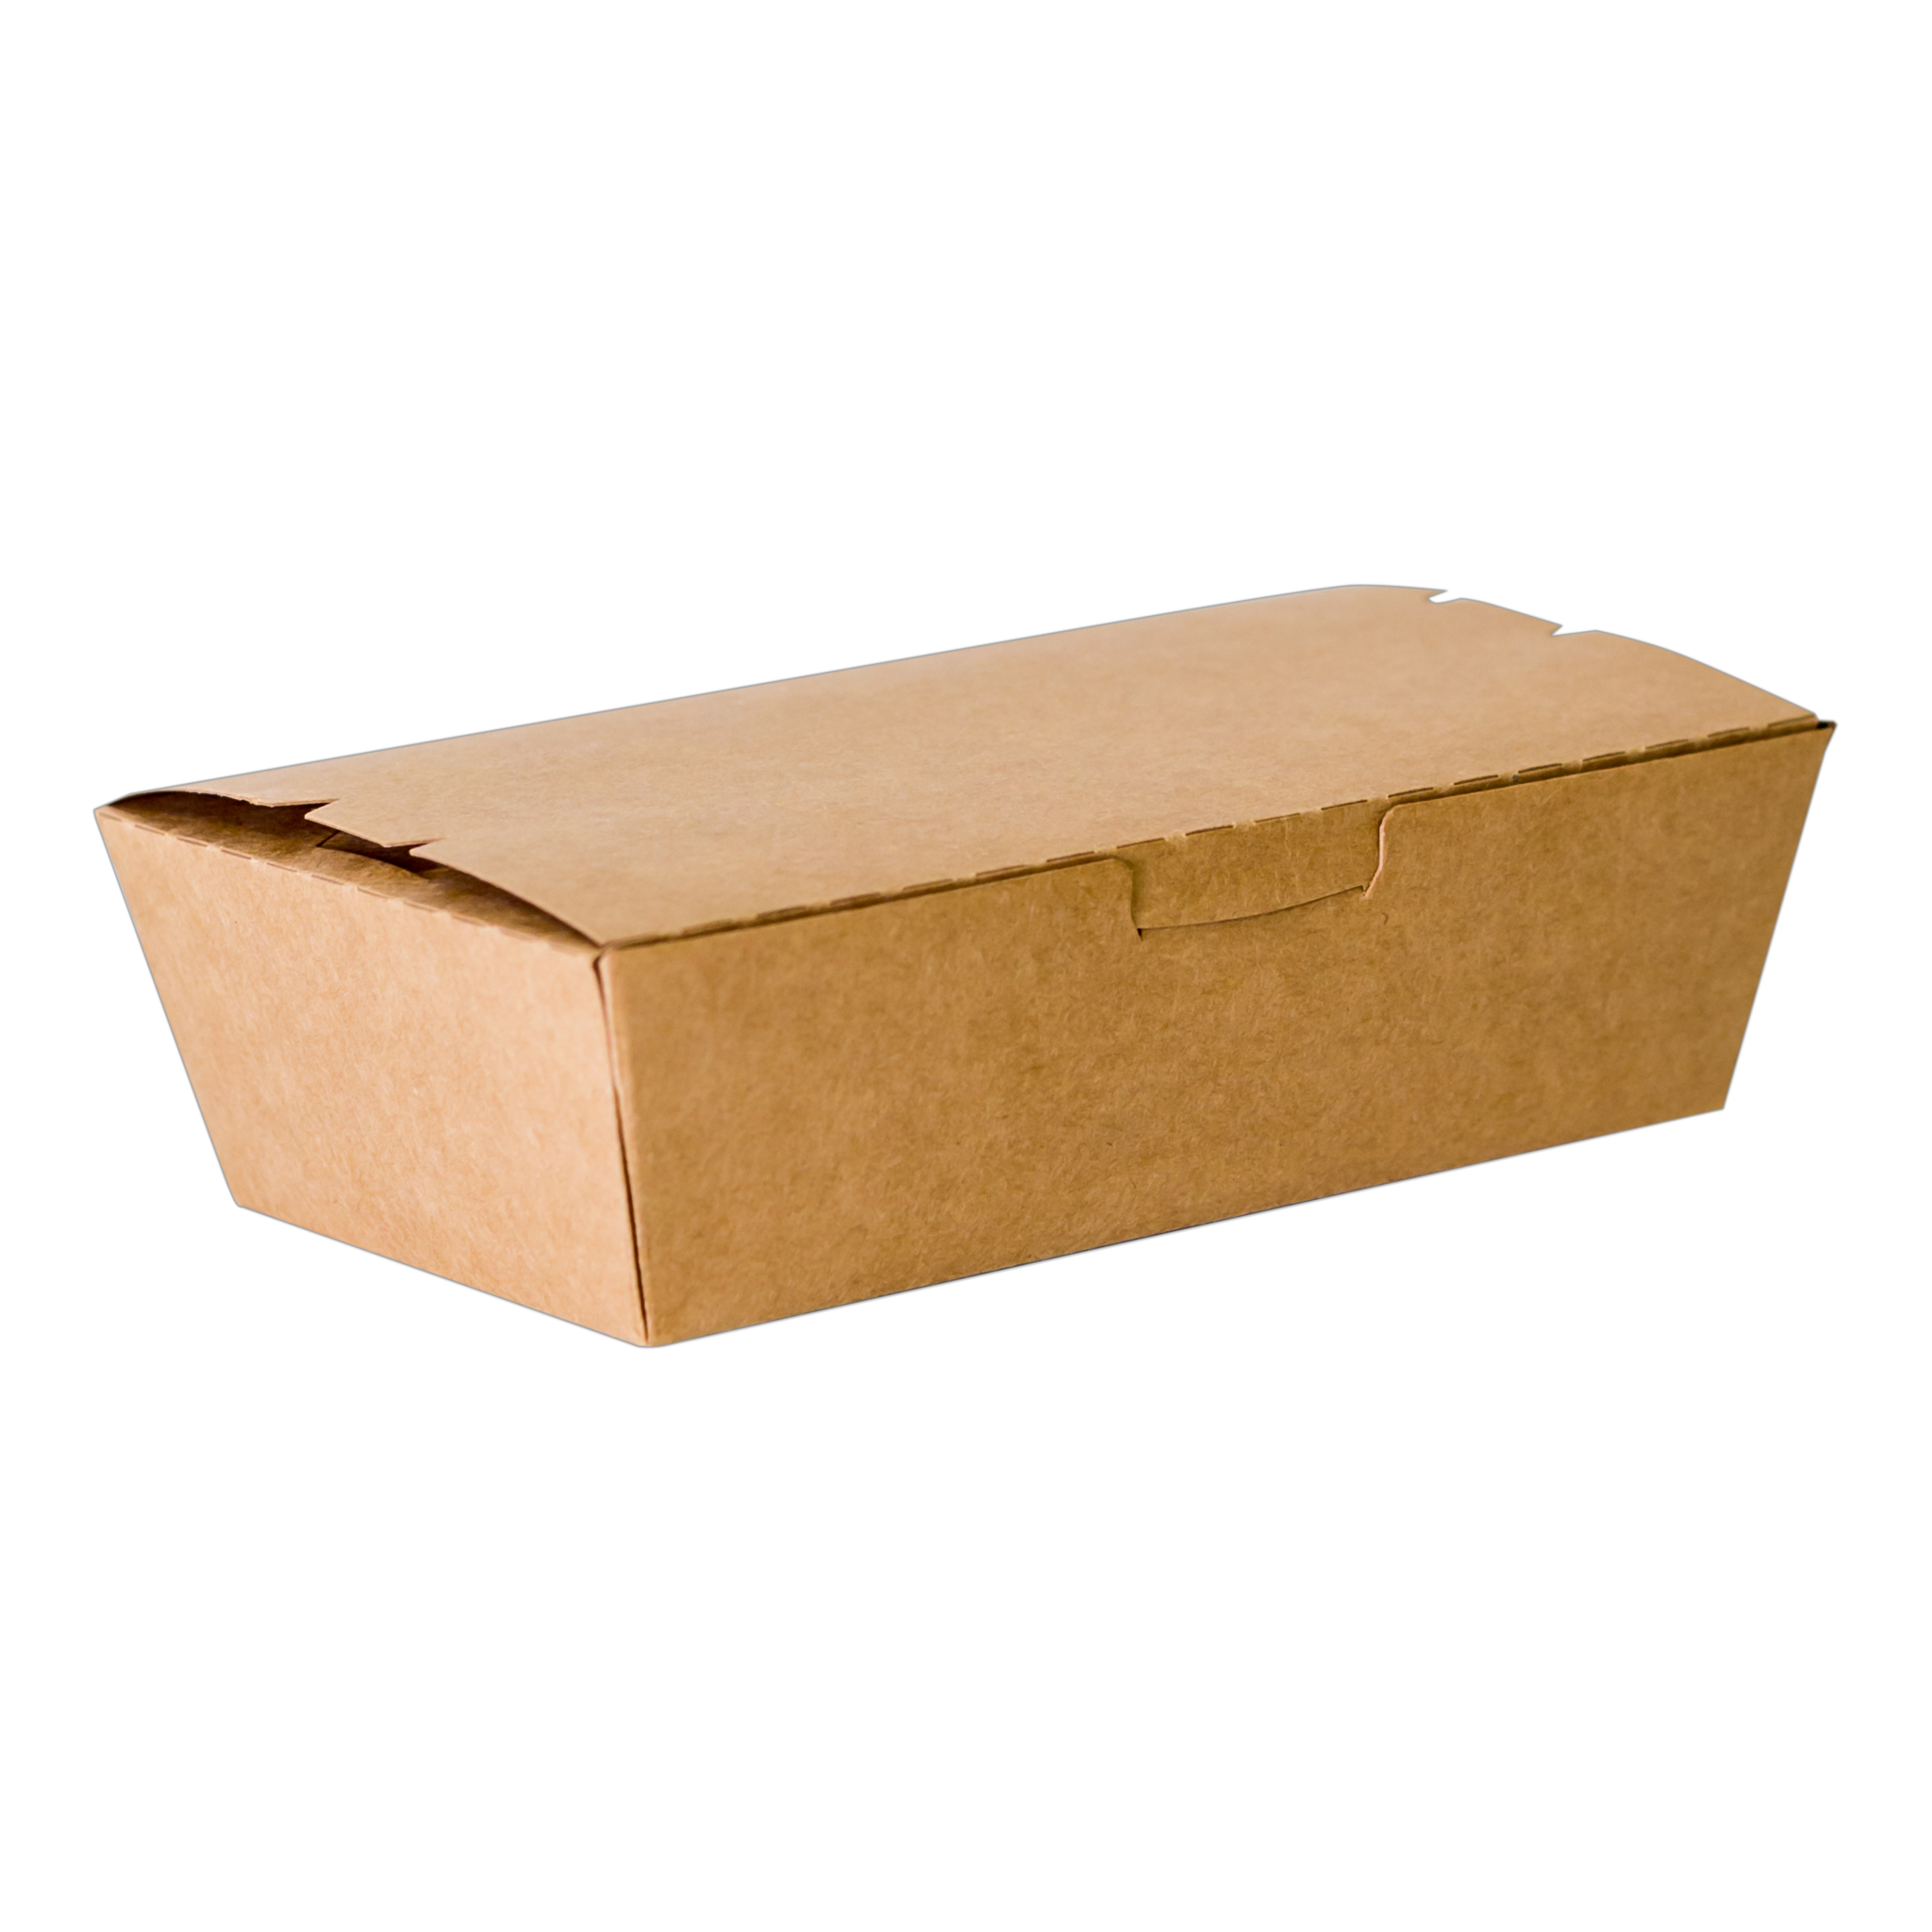 Single Compartment Lunch Box (Brown) - Small